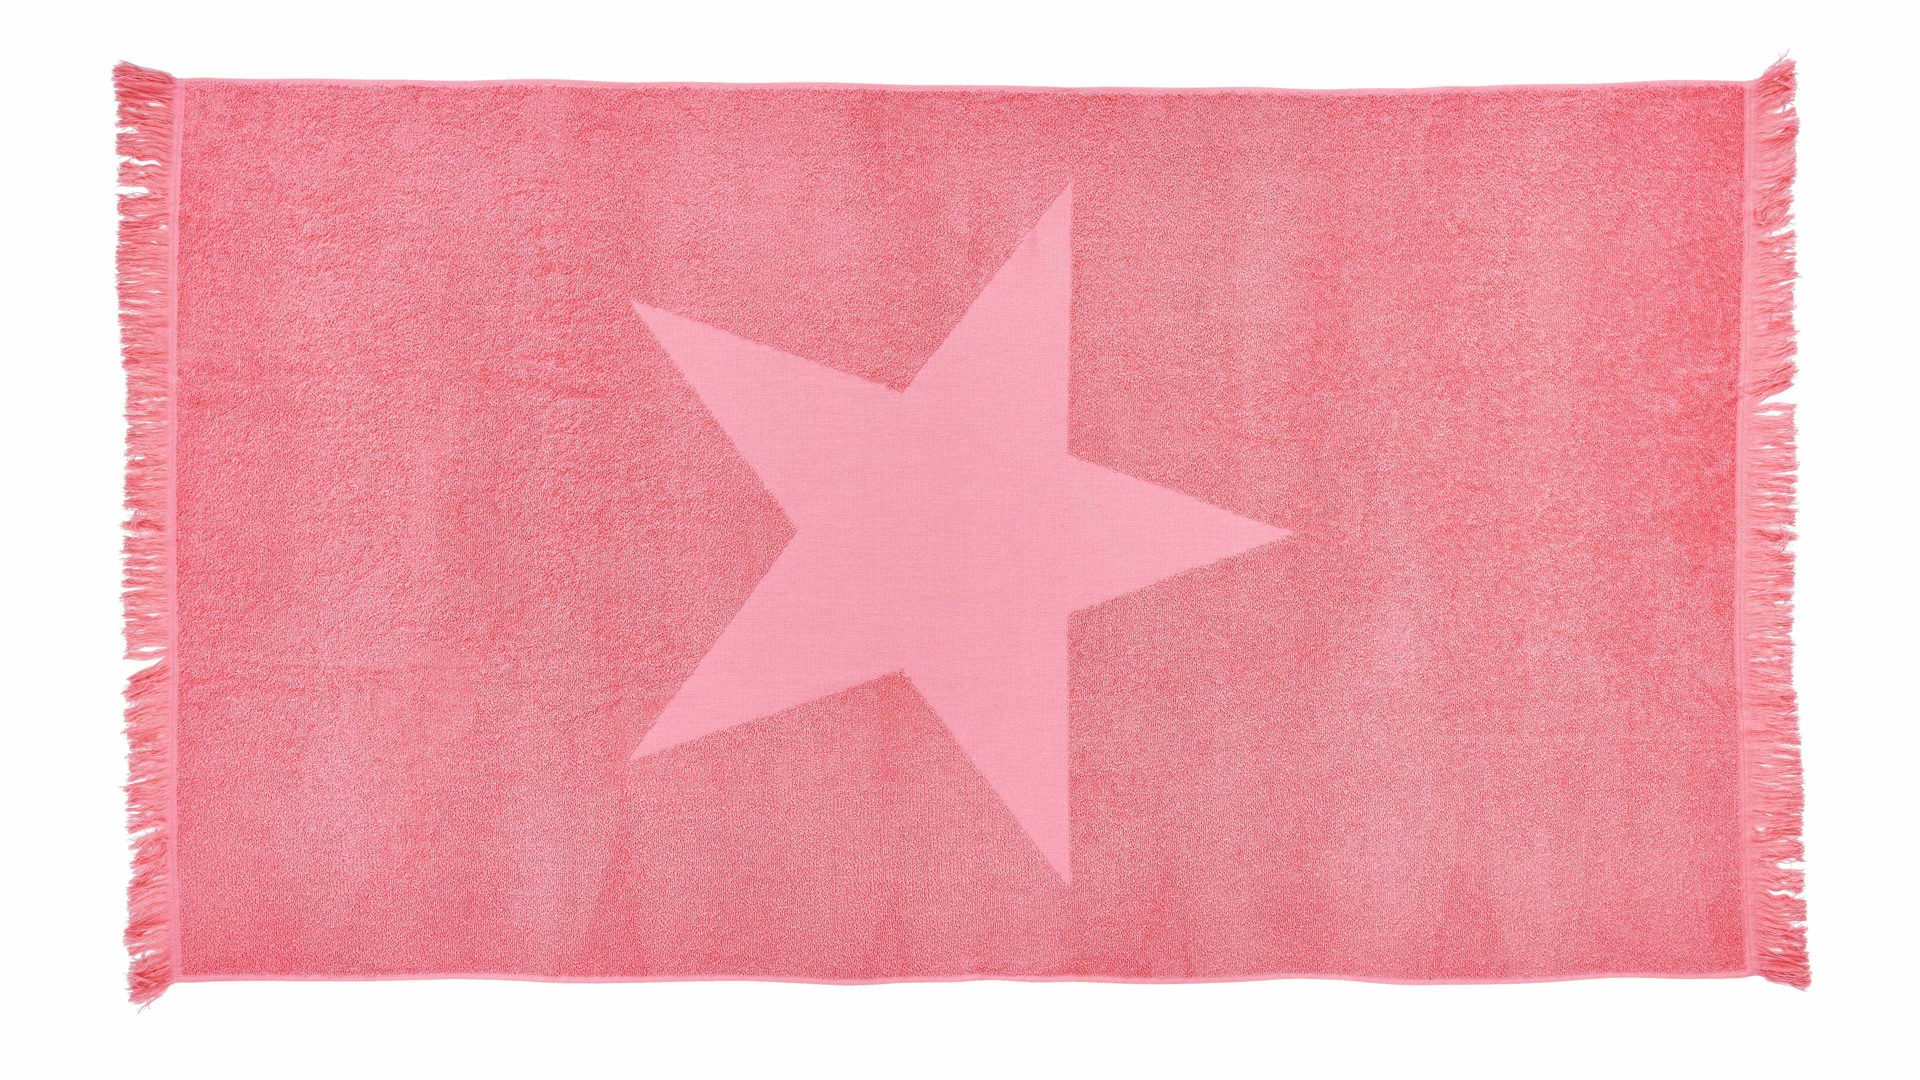 Hamamtuch Done® be different aus Stoff in Lila DONE® Hamamtuch Capri pinkfarbene Baumwolle – Motiv Stern